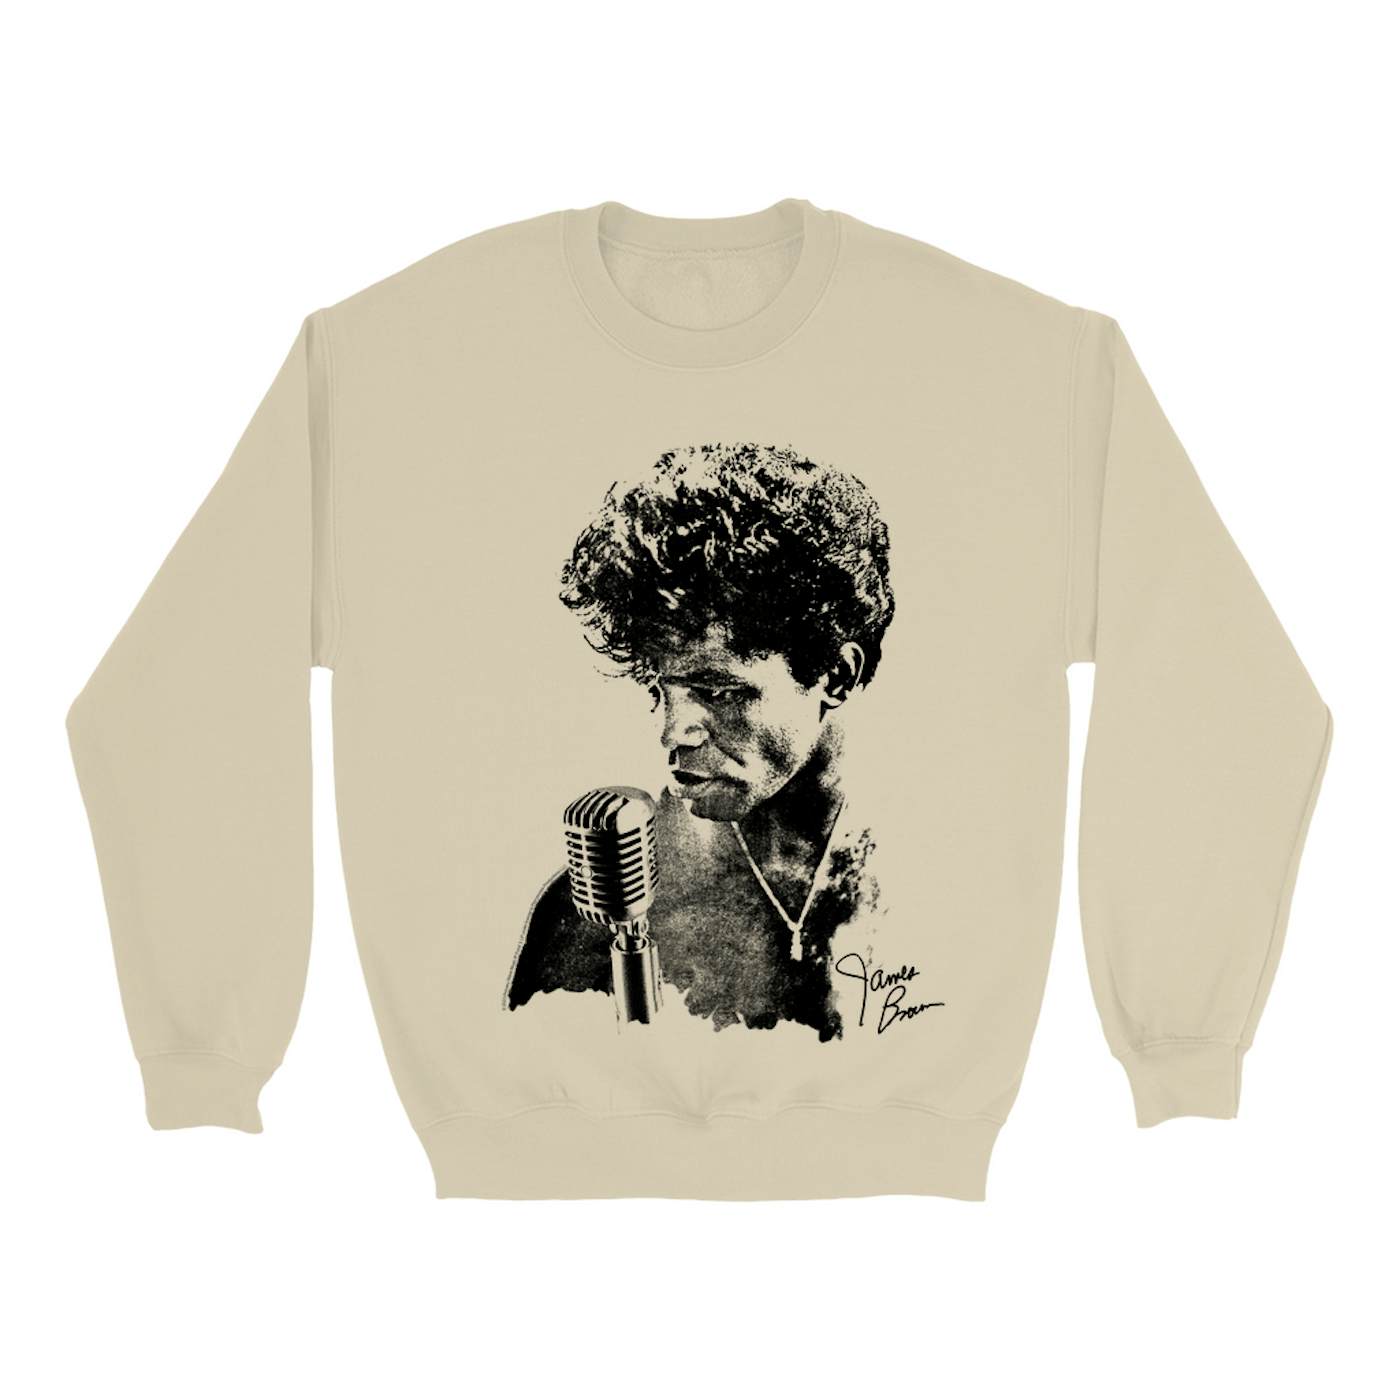 James Brown Sweatshirt | Grainy Black White Photo With Signature James Brown Sweatshirt